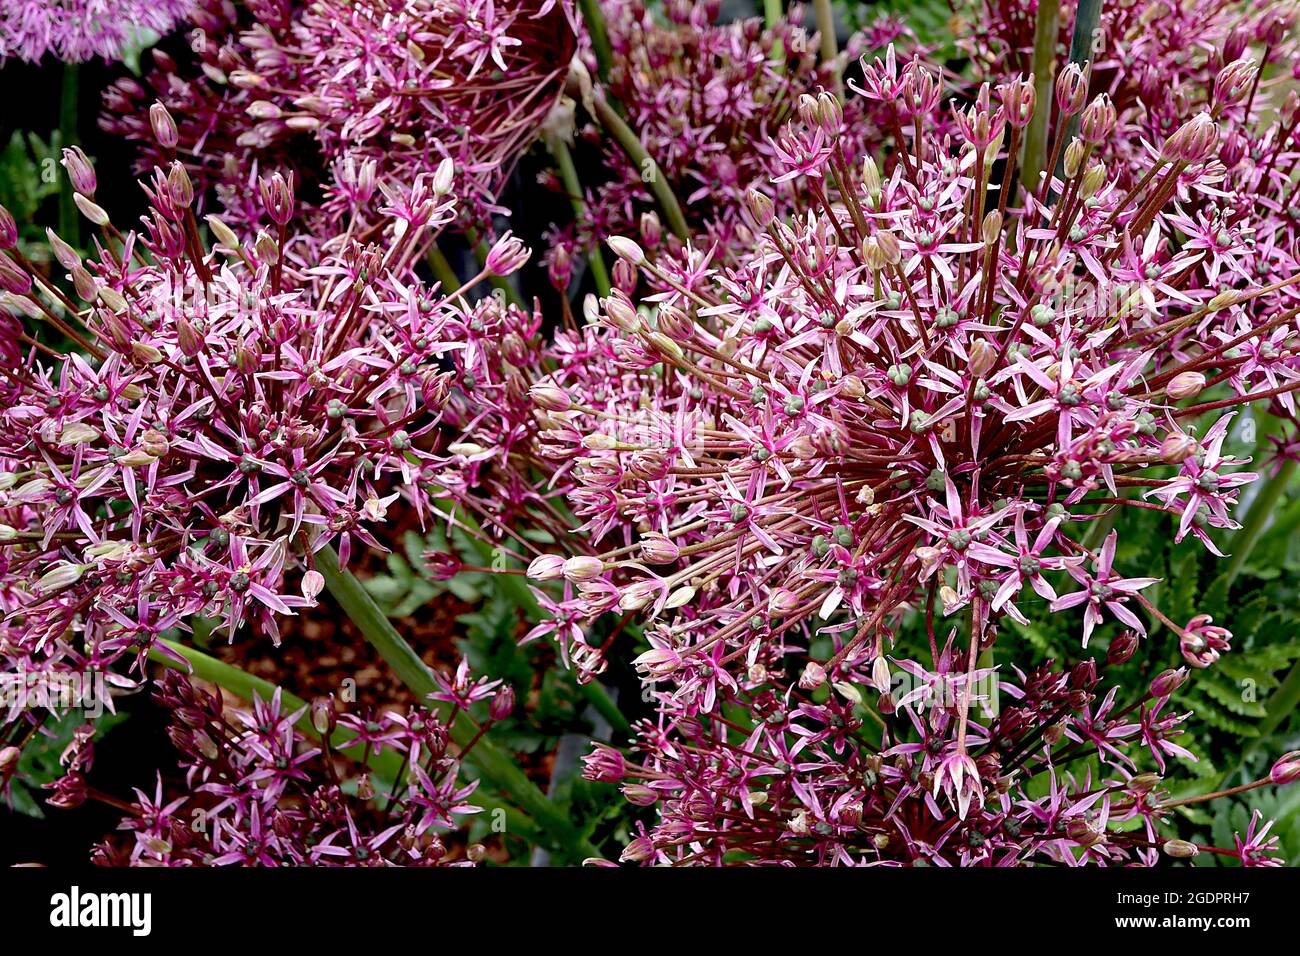 Allium ‘Spider’ base spherical umbel of rose star-shaped flowers with elongated stalks,  July, England, UK Stock Photo